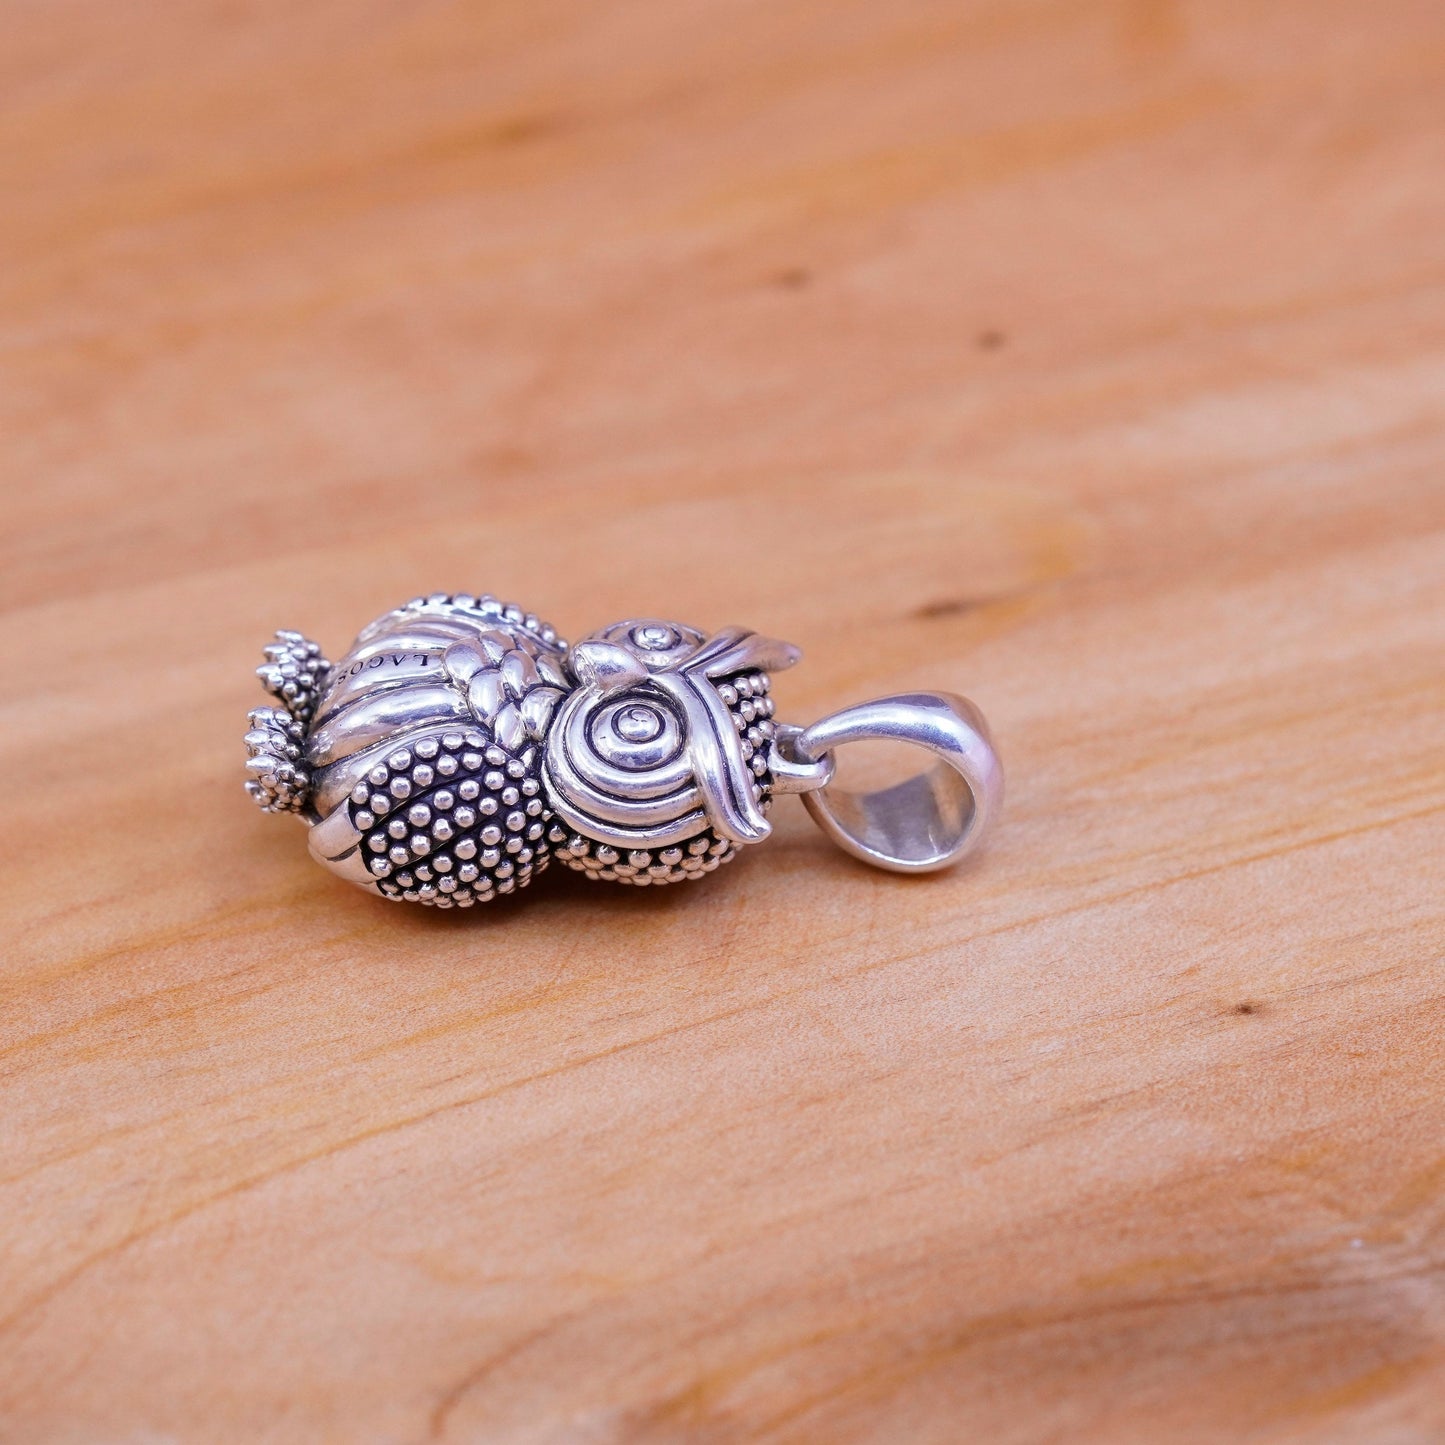 Lacos rare wonder Sterling silver handmade pendant, solid beads 925 bird owl